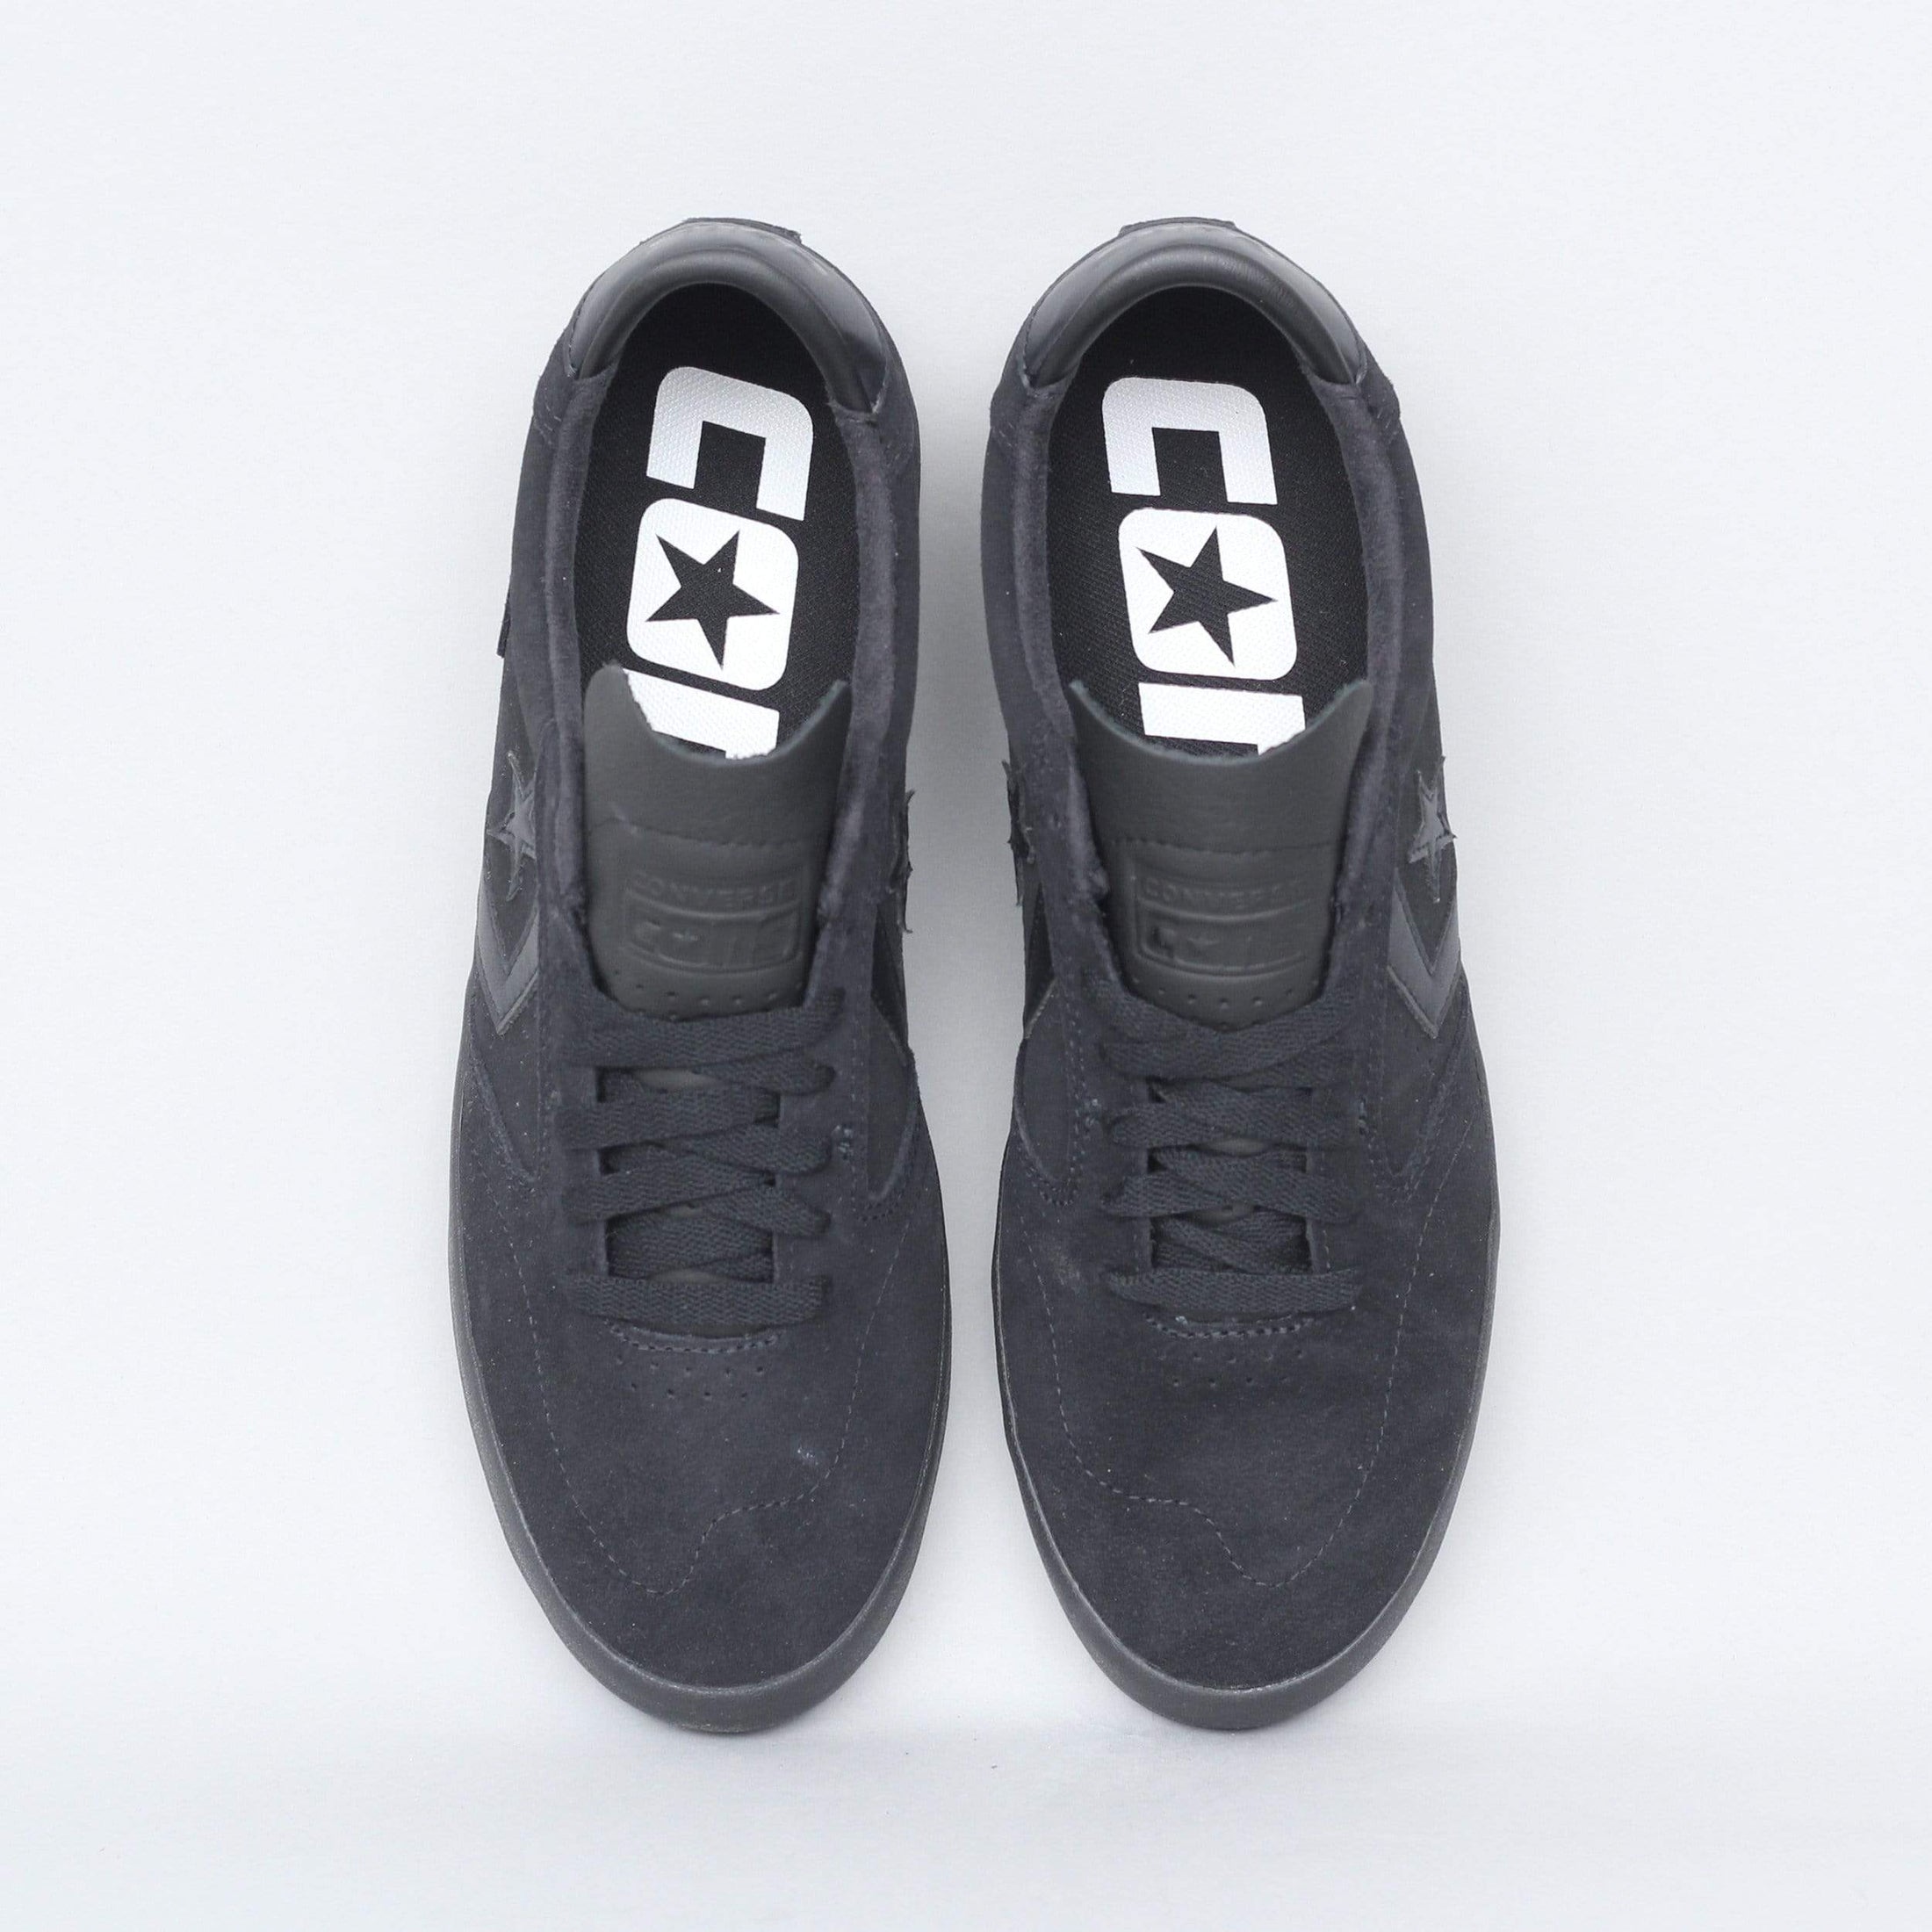 Converse Checkpoint Pro OX Shoes Black / Black / Black